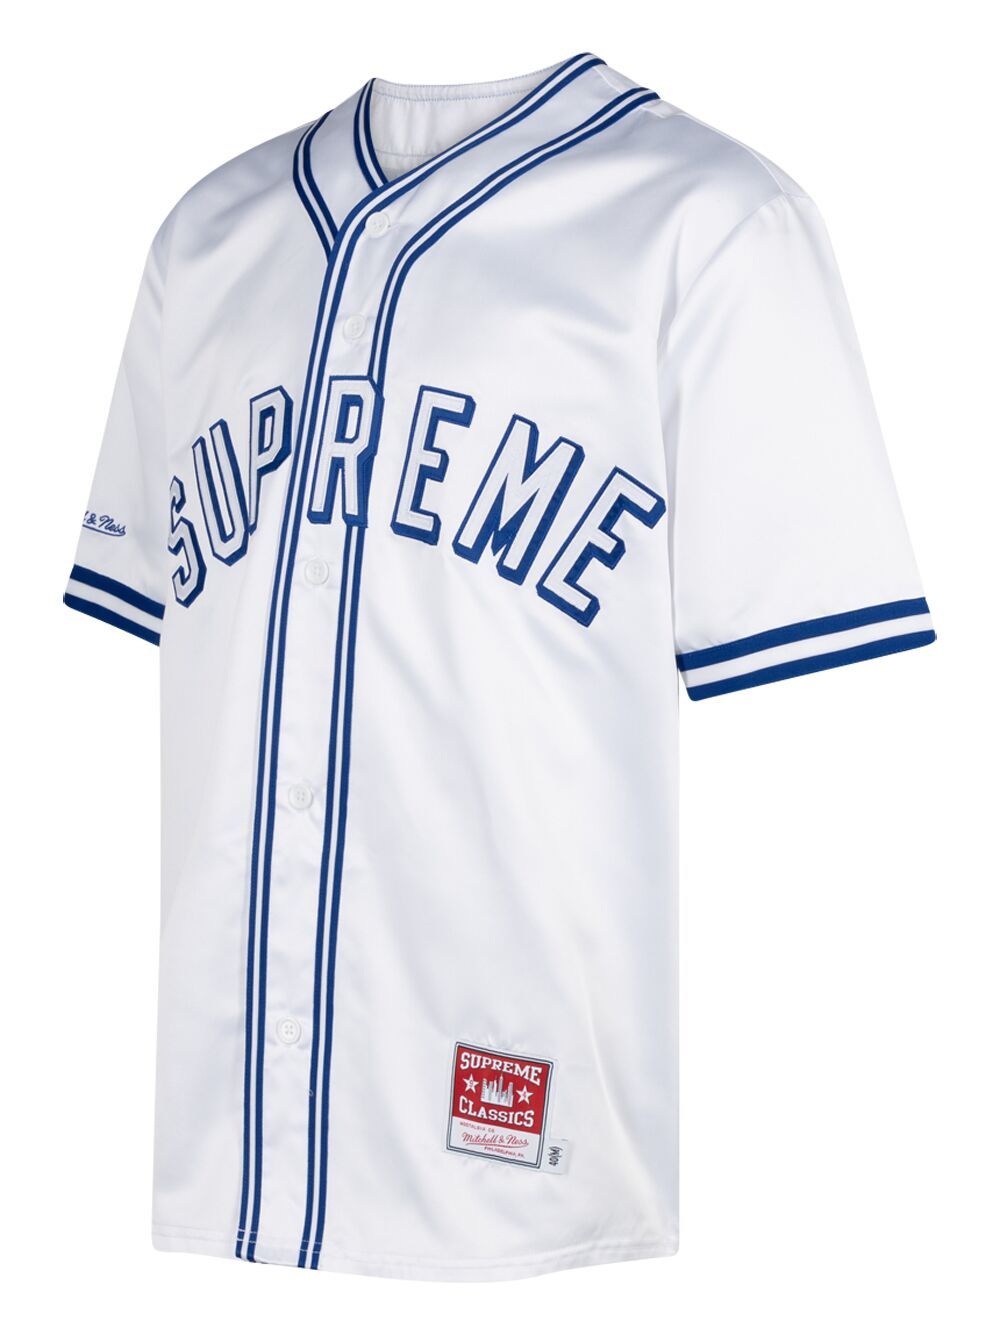 Nike Supreme Baseball Jersey Clothes Sport For Men Women